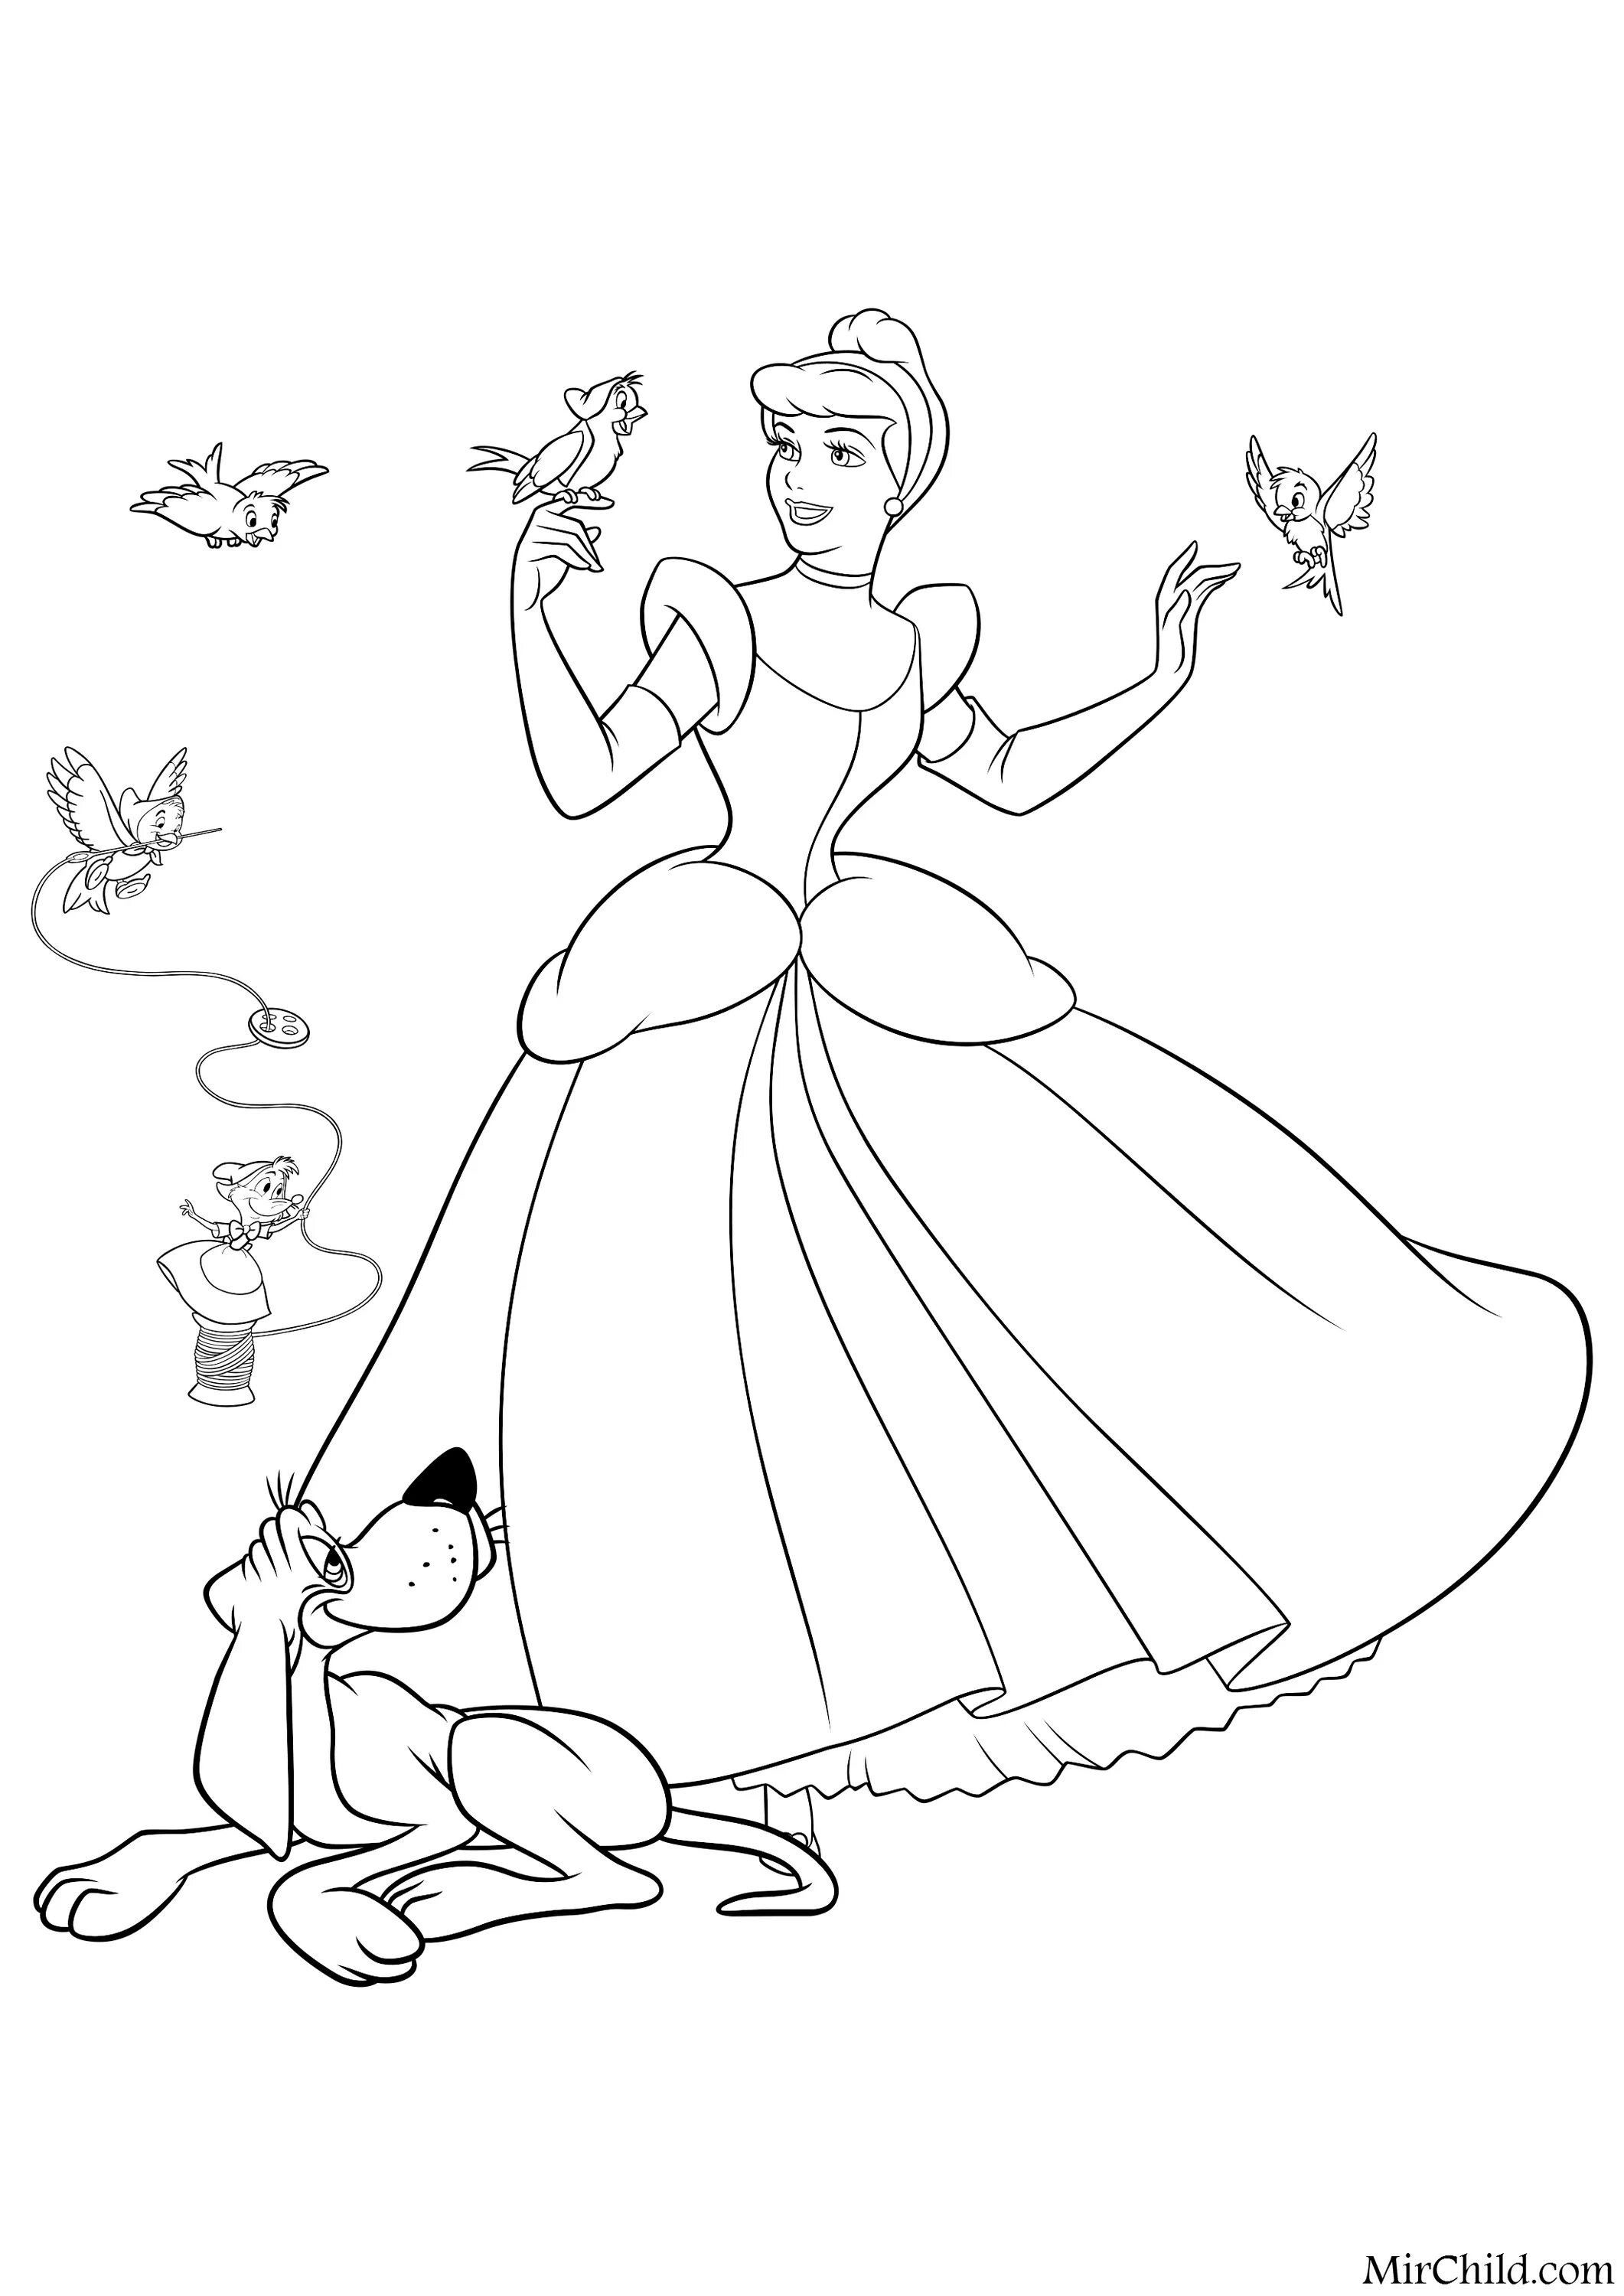 Joyful Cinderella coloring book for kids